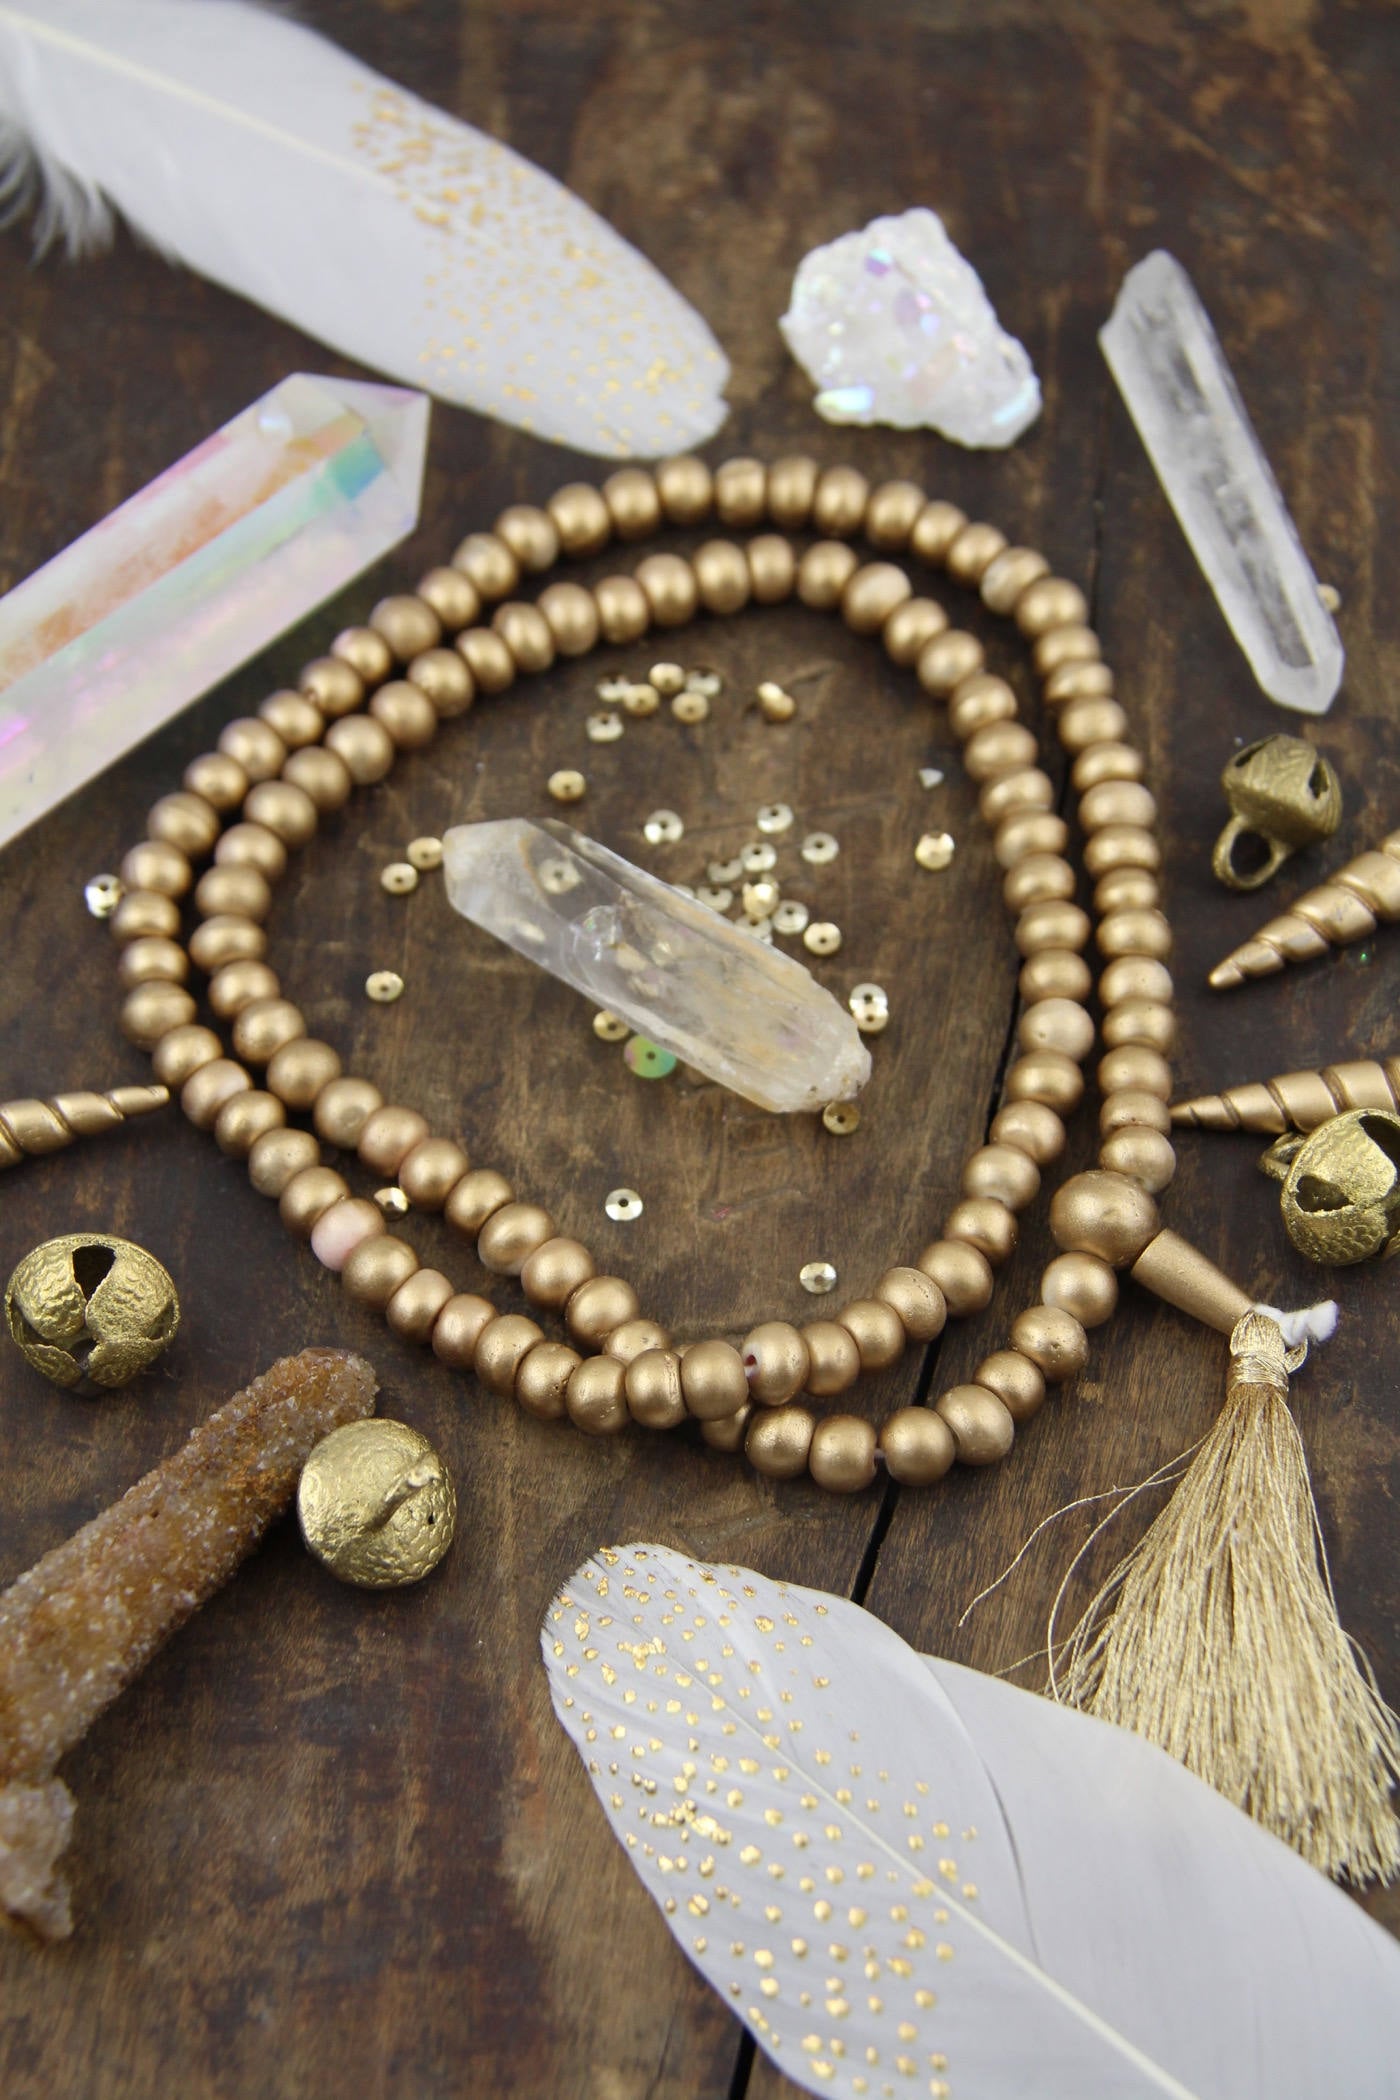 Golden Glow Bone Mala Beads, 108 beads, Exclusive Metallic Color, Boho Yoga Jewelry Making Supply, Rondelle Beads for Bracelets, Yoga Mala